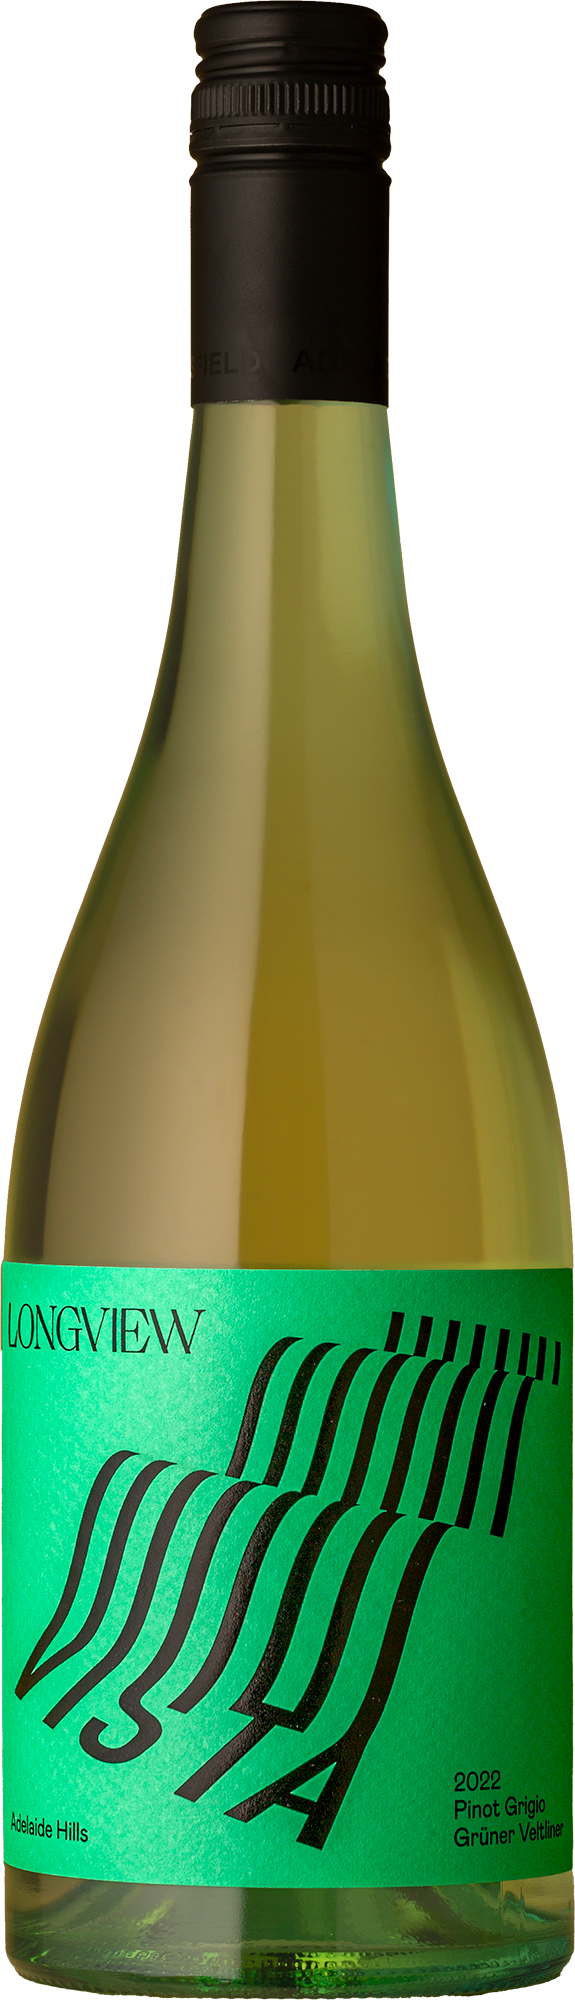 Longview - Vista Grigio Grüner White Blend 2022 White Wine